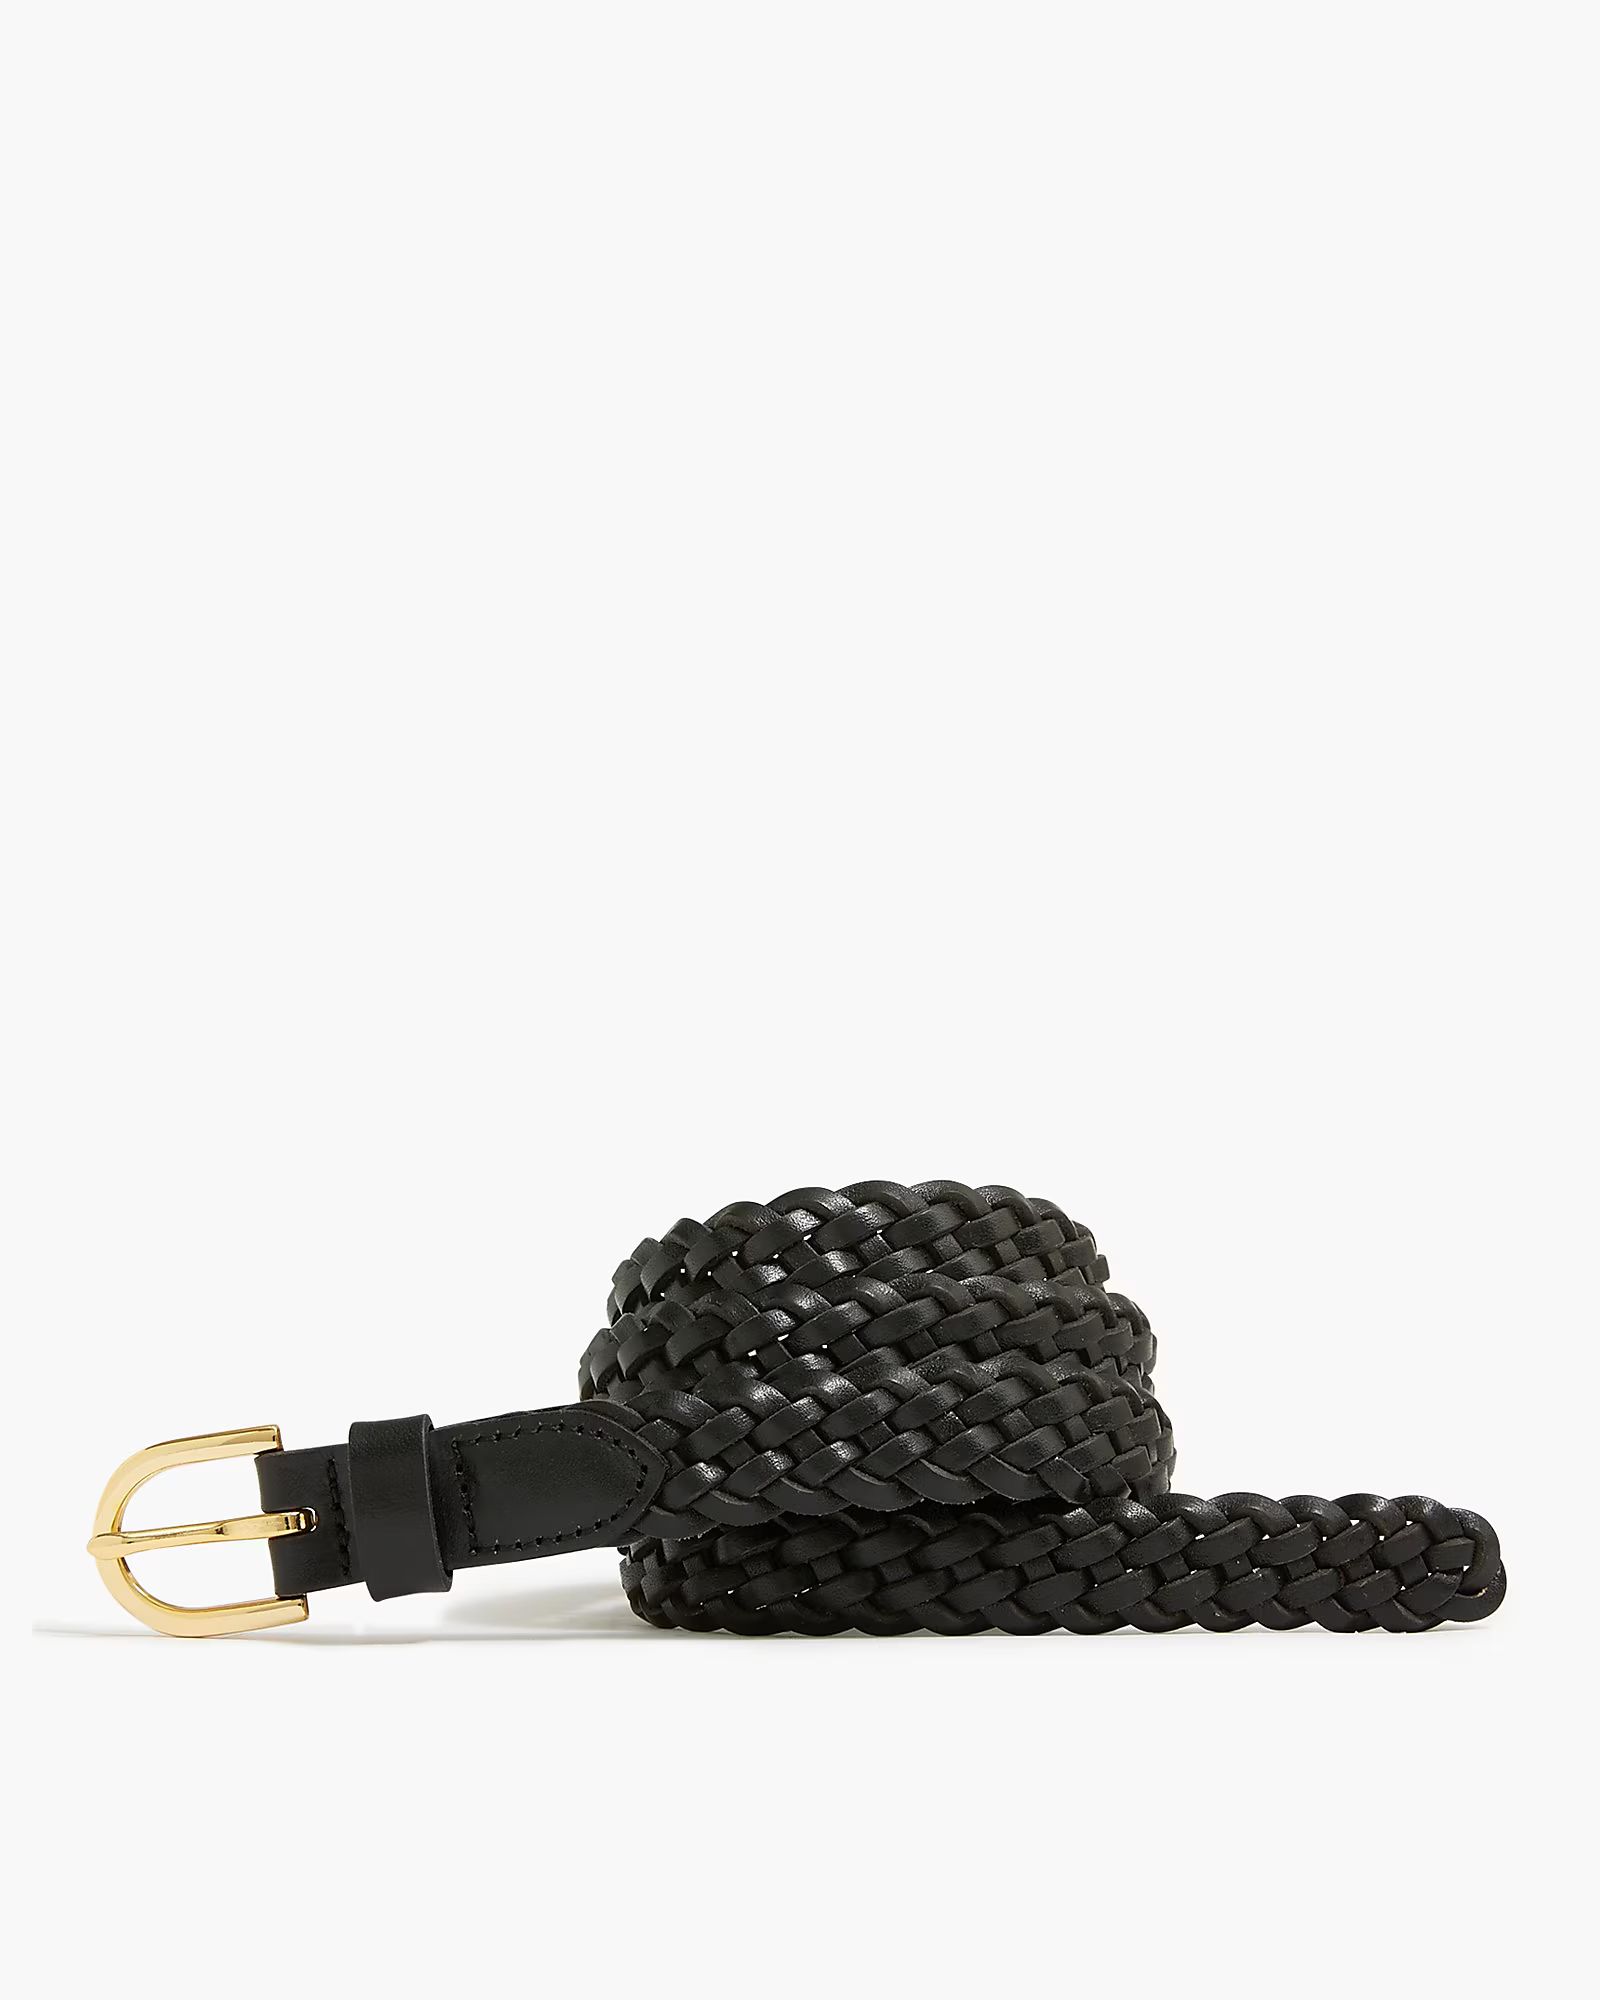 Skinny braided leather belt | J.Crew Factory